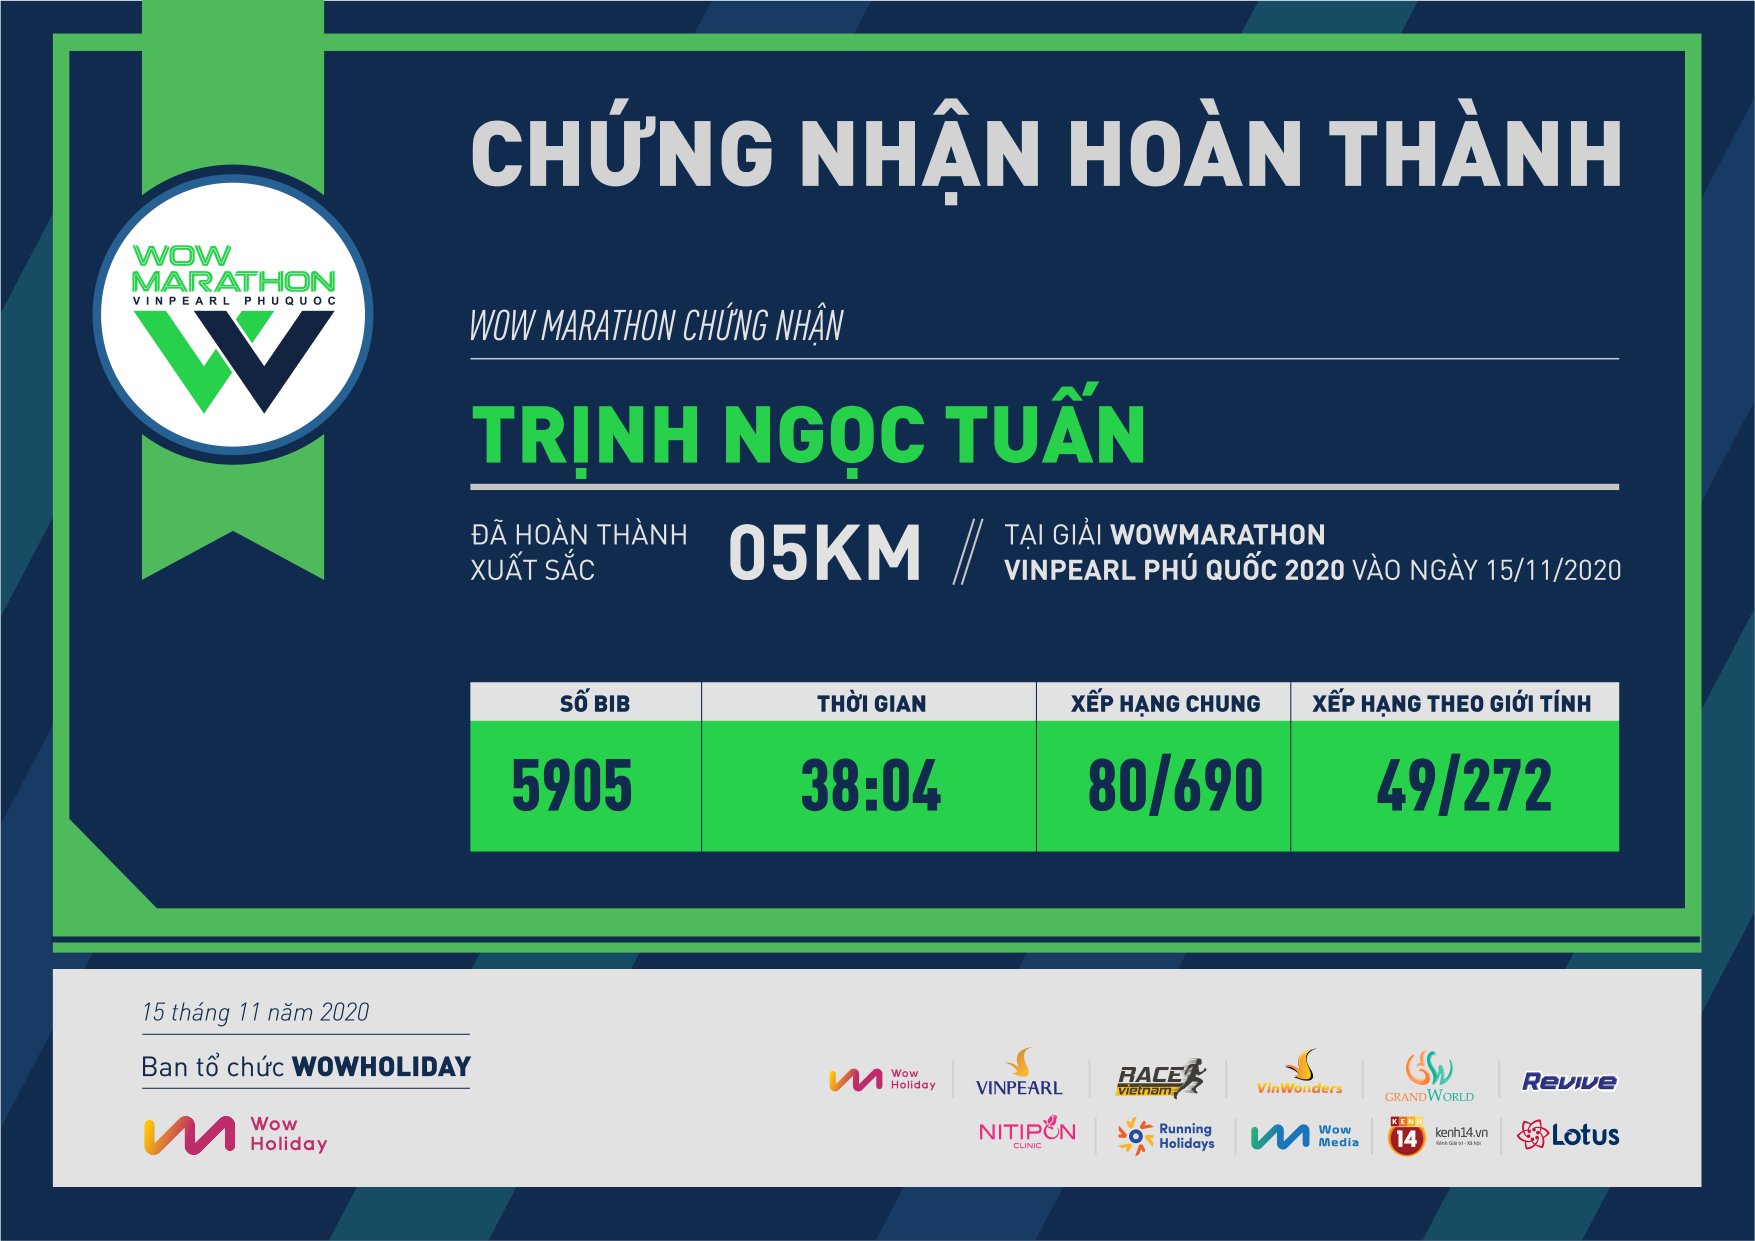 5905 - Trịnh Ngọc Tuấn